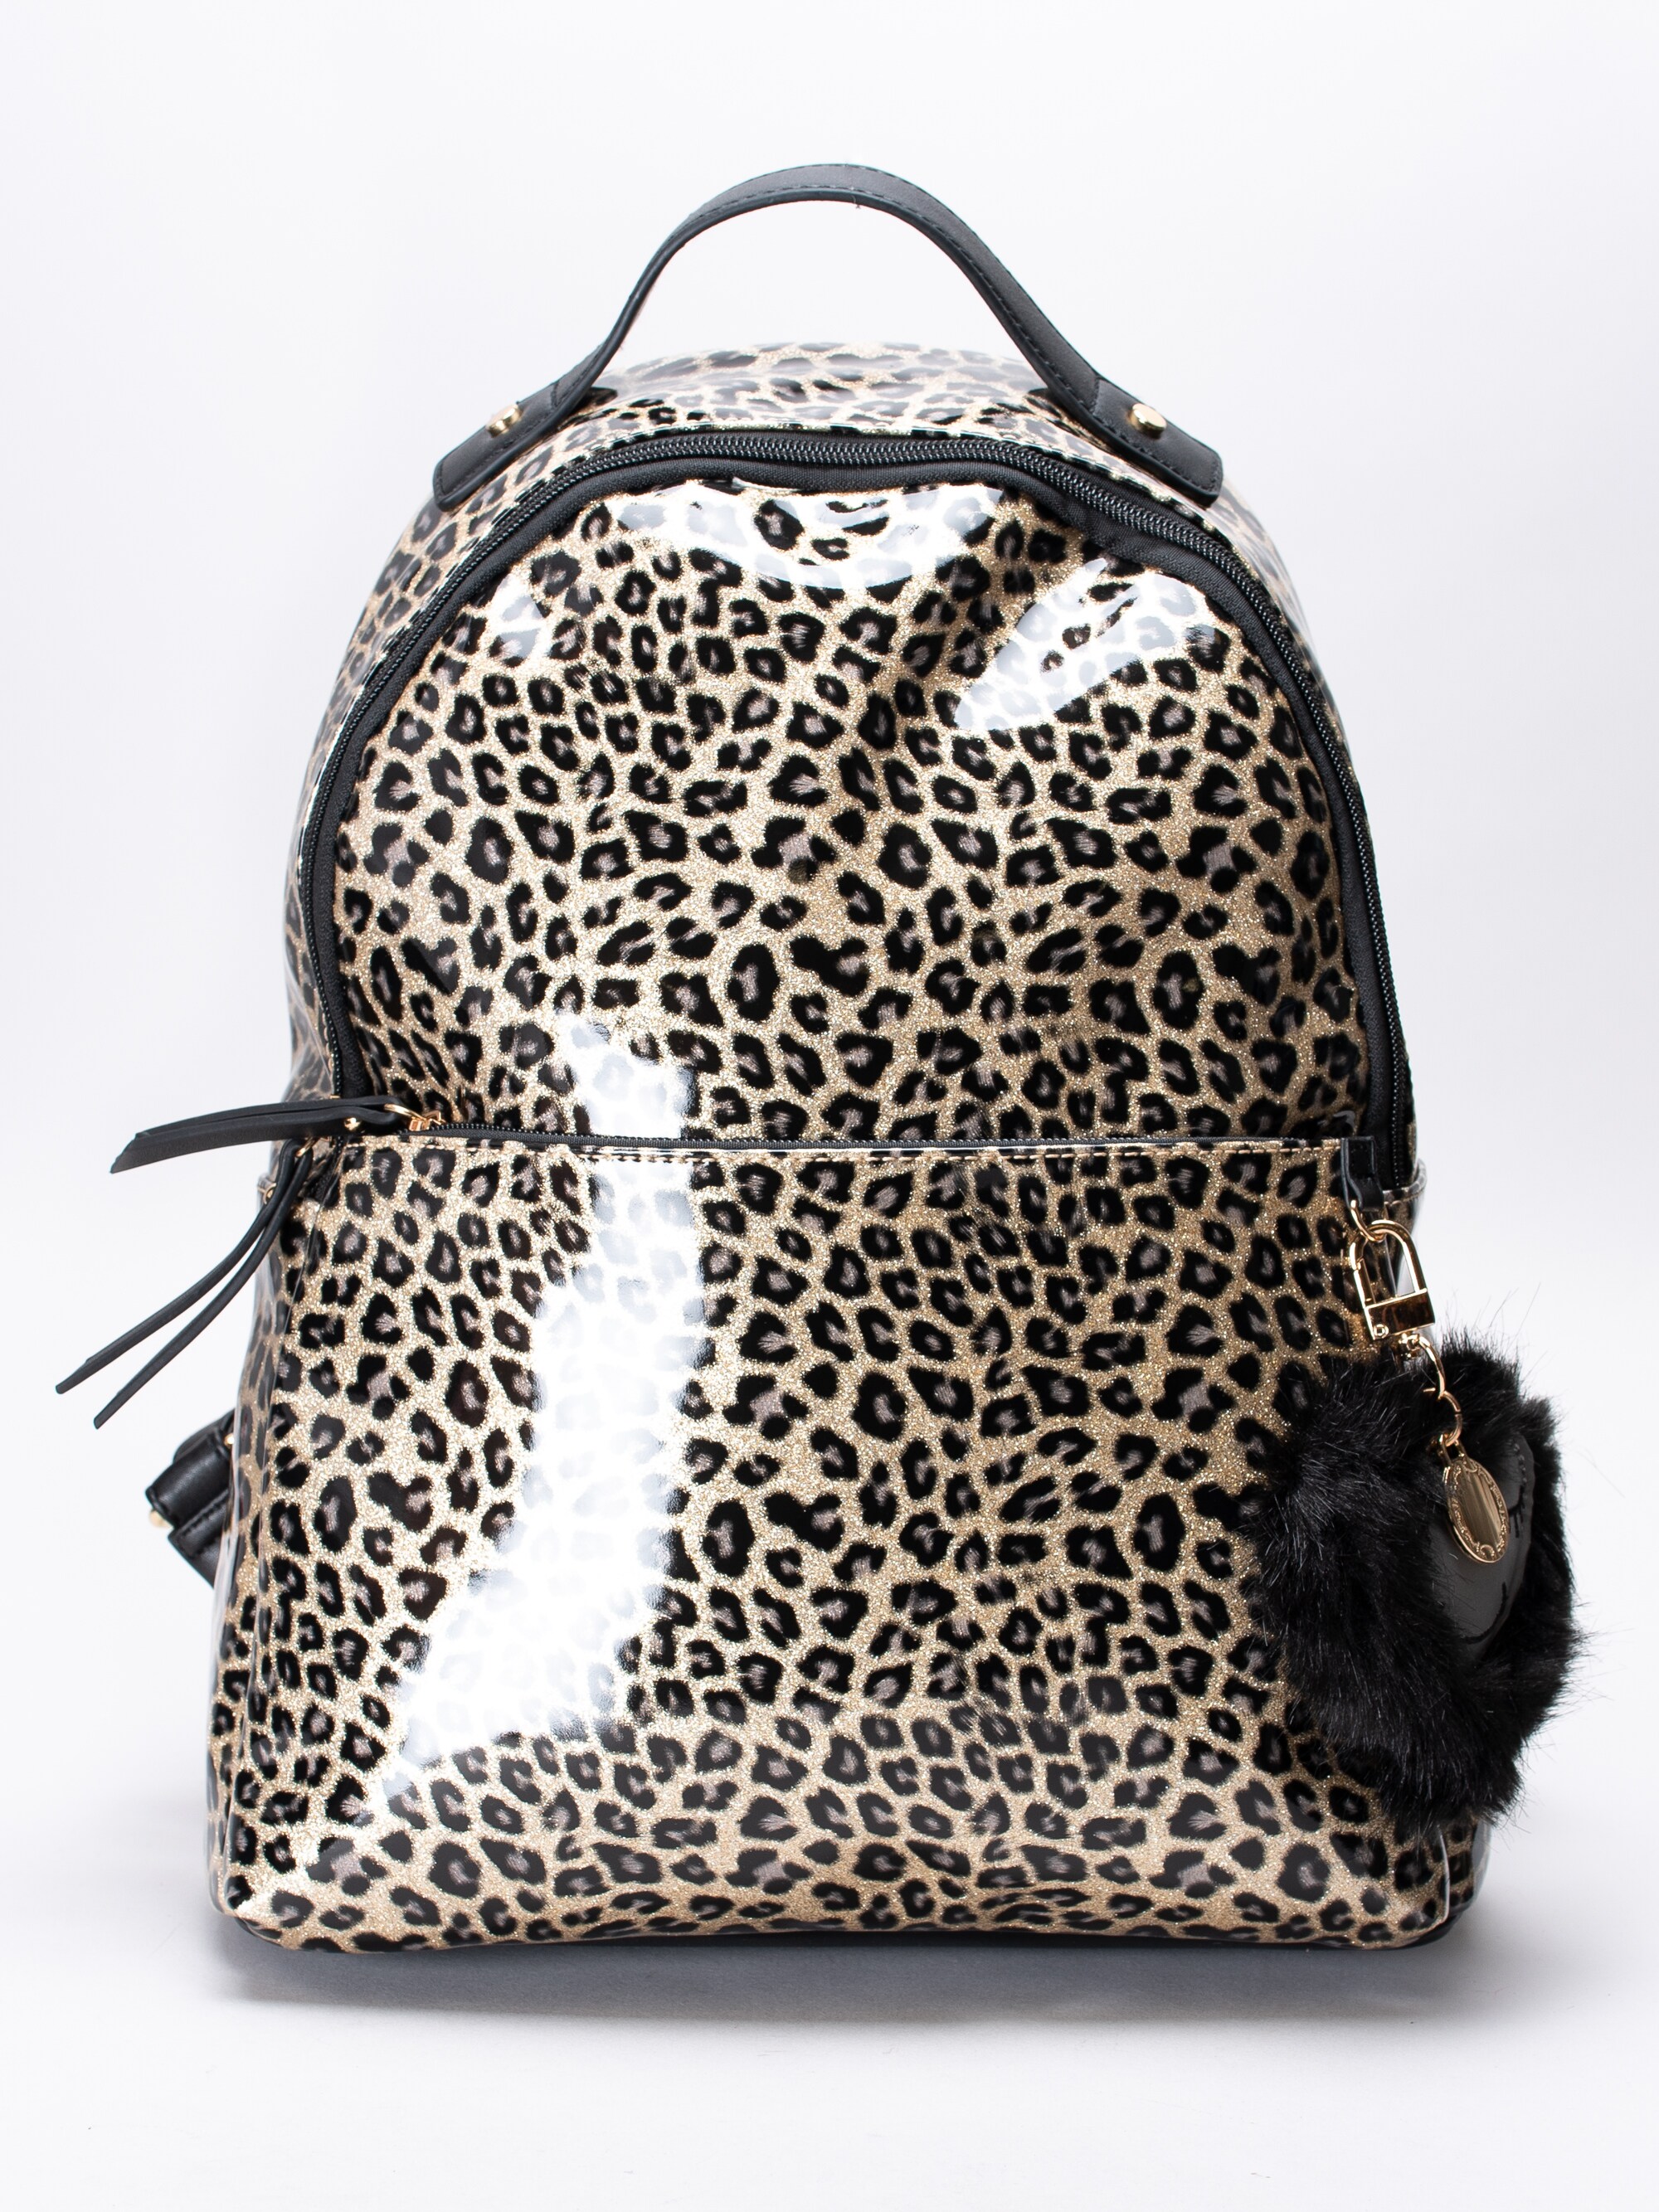 86193024 Ulrika Design 36-5411-7 Wild Kids guld glittrig leopard mönstrad ryggsäck för barn-1